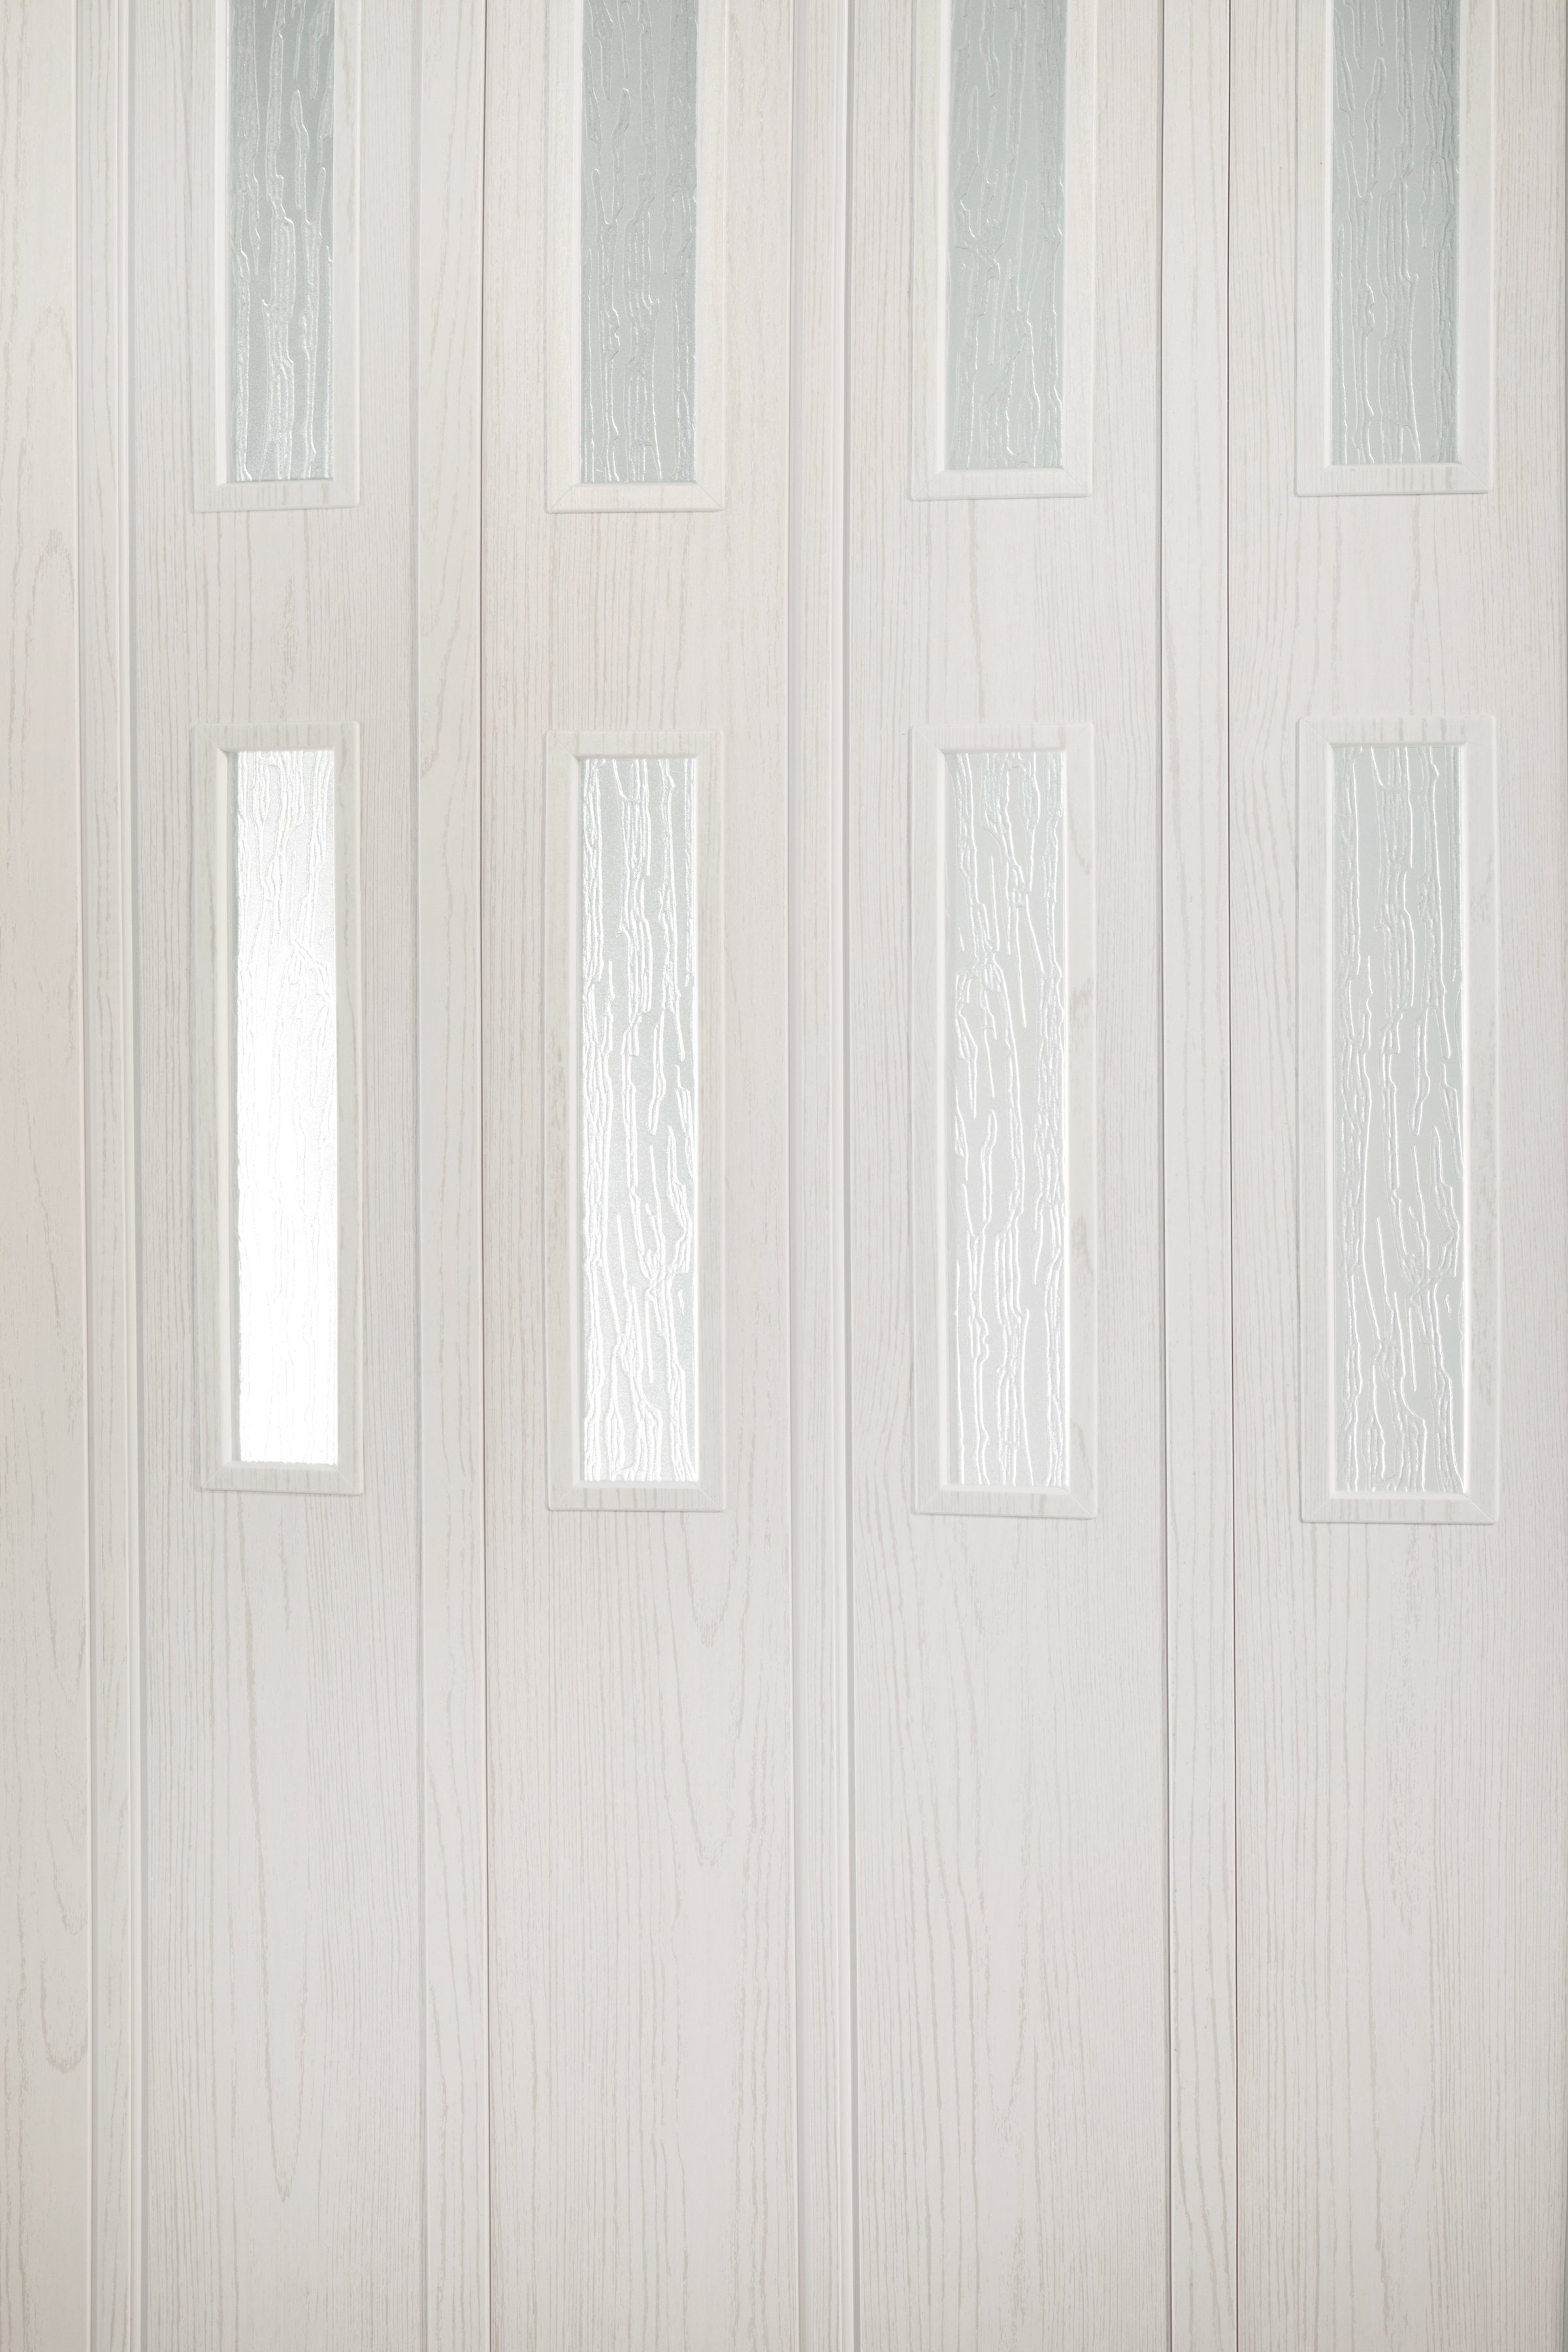 Forte Falttür Luciana, weiß, 202 cm 2 m. x Festmaß 88,5 Fenster